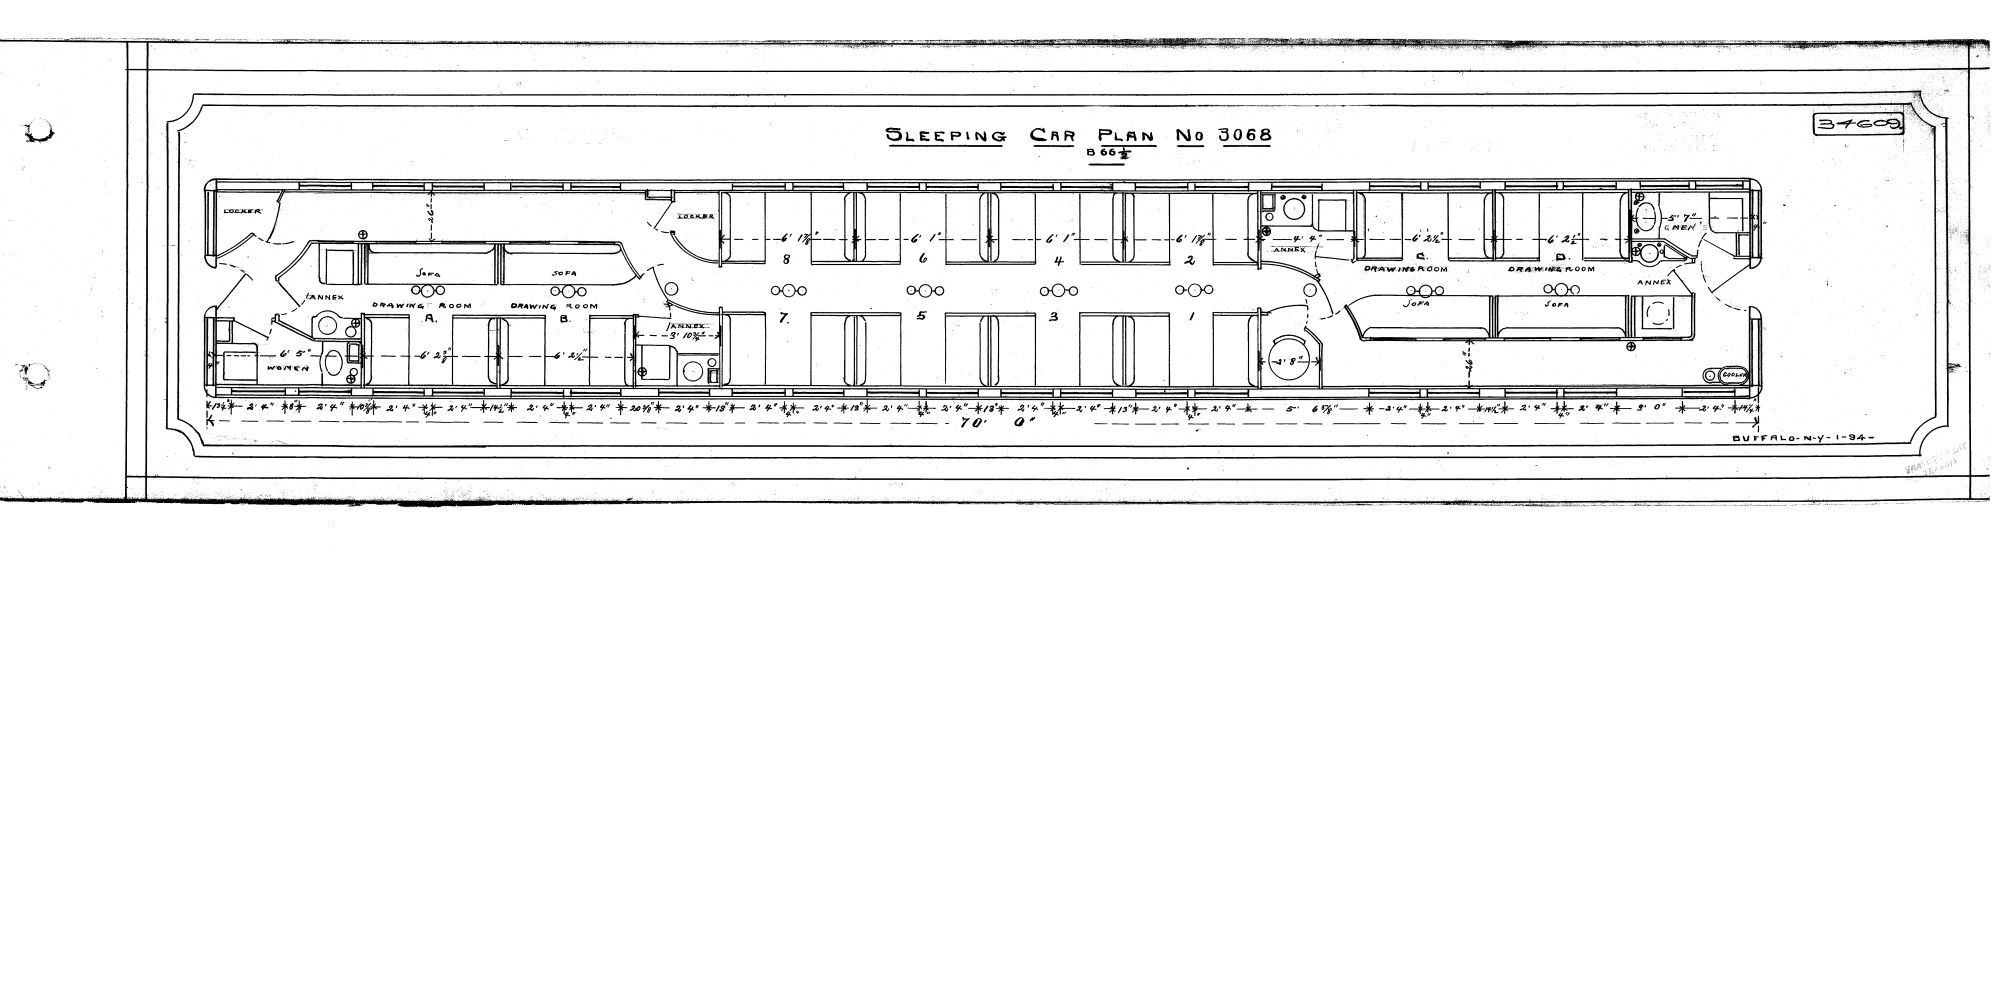 Amtrak Sleeping Car Diagrams | My Wiring DIagram